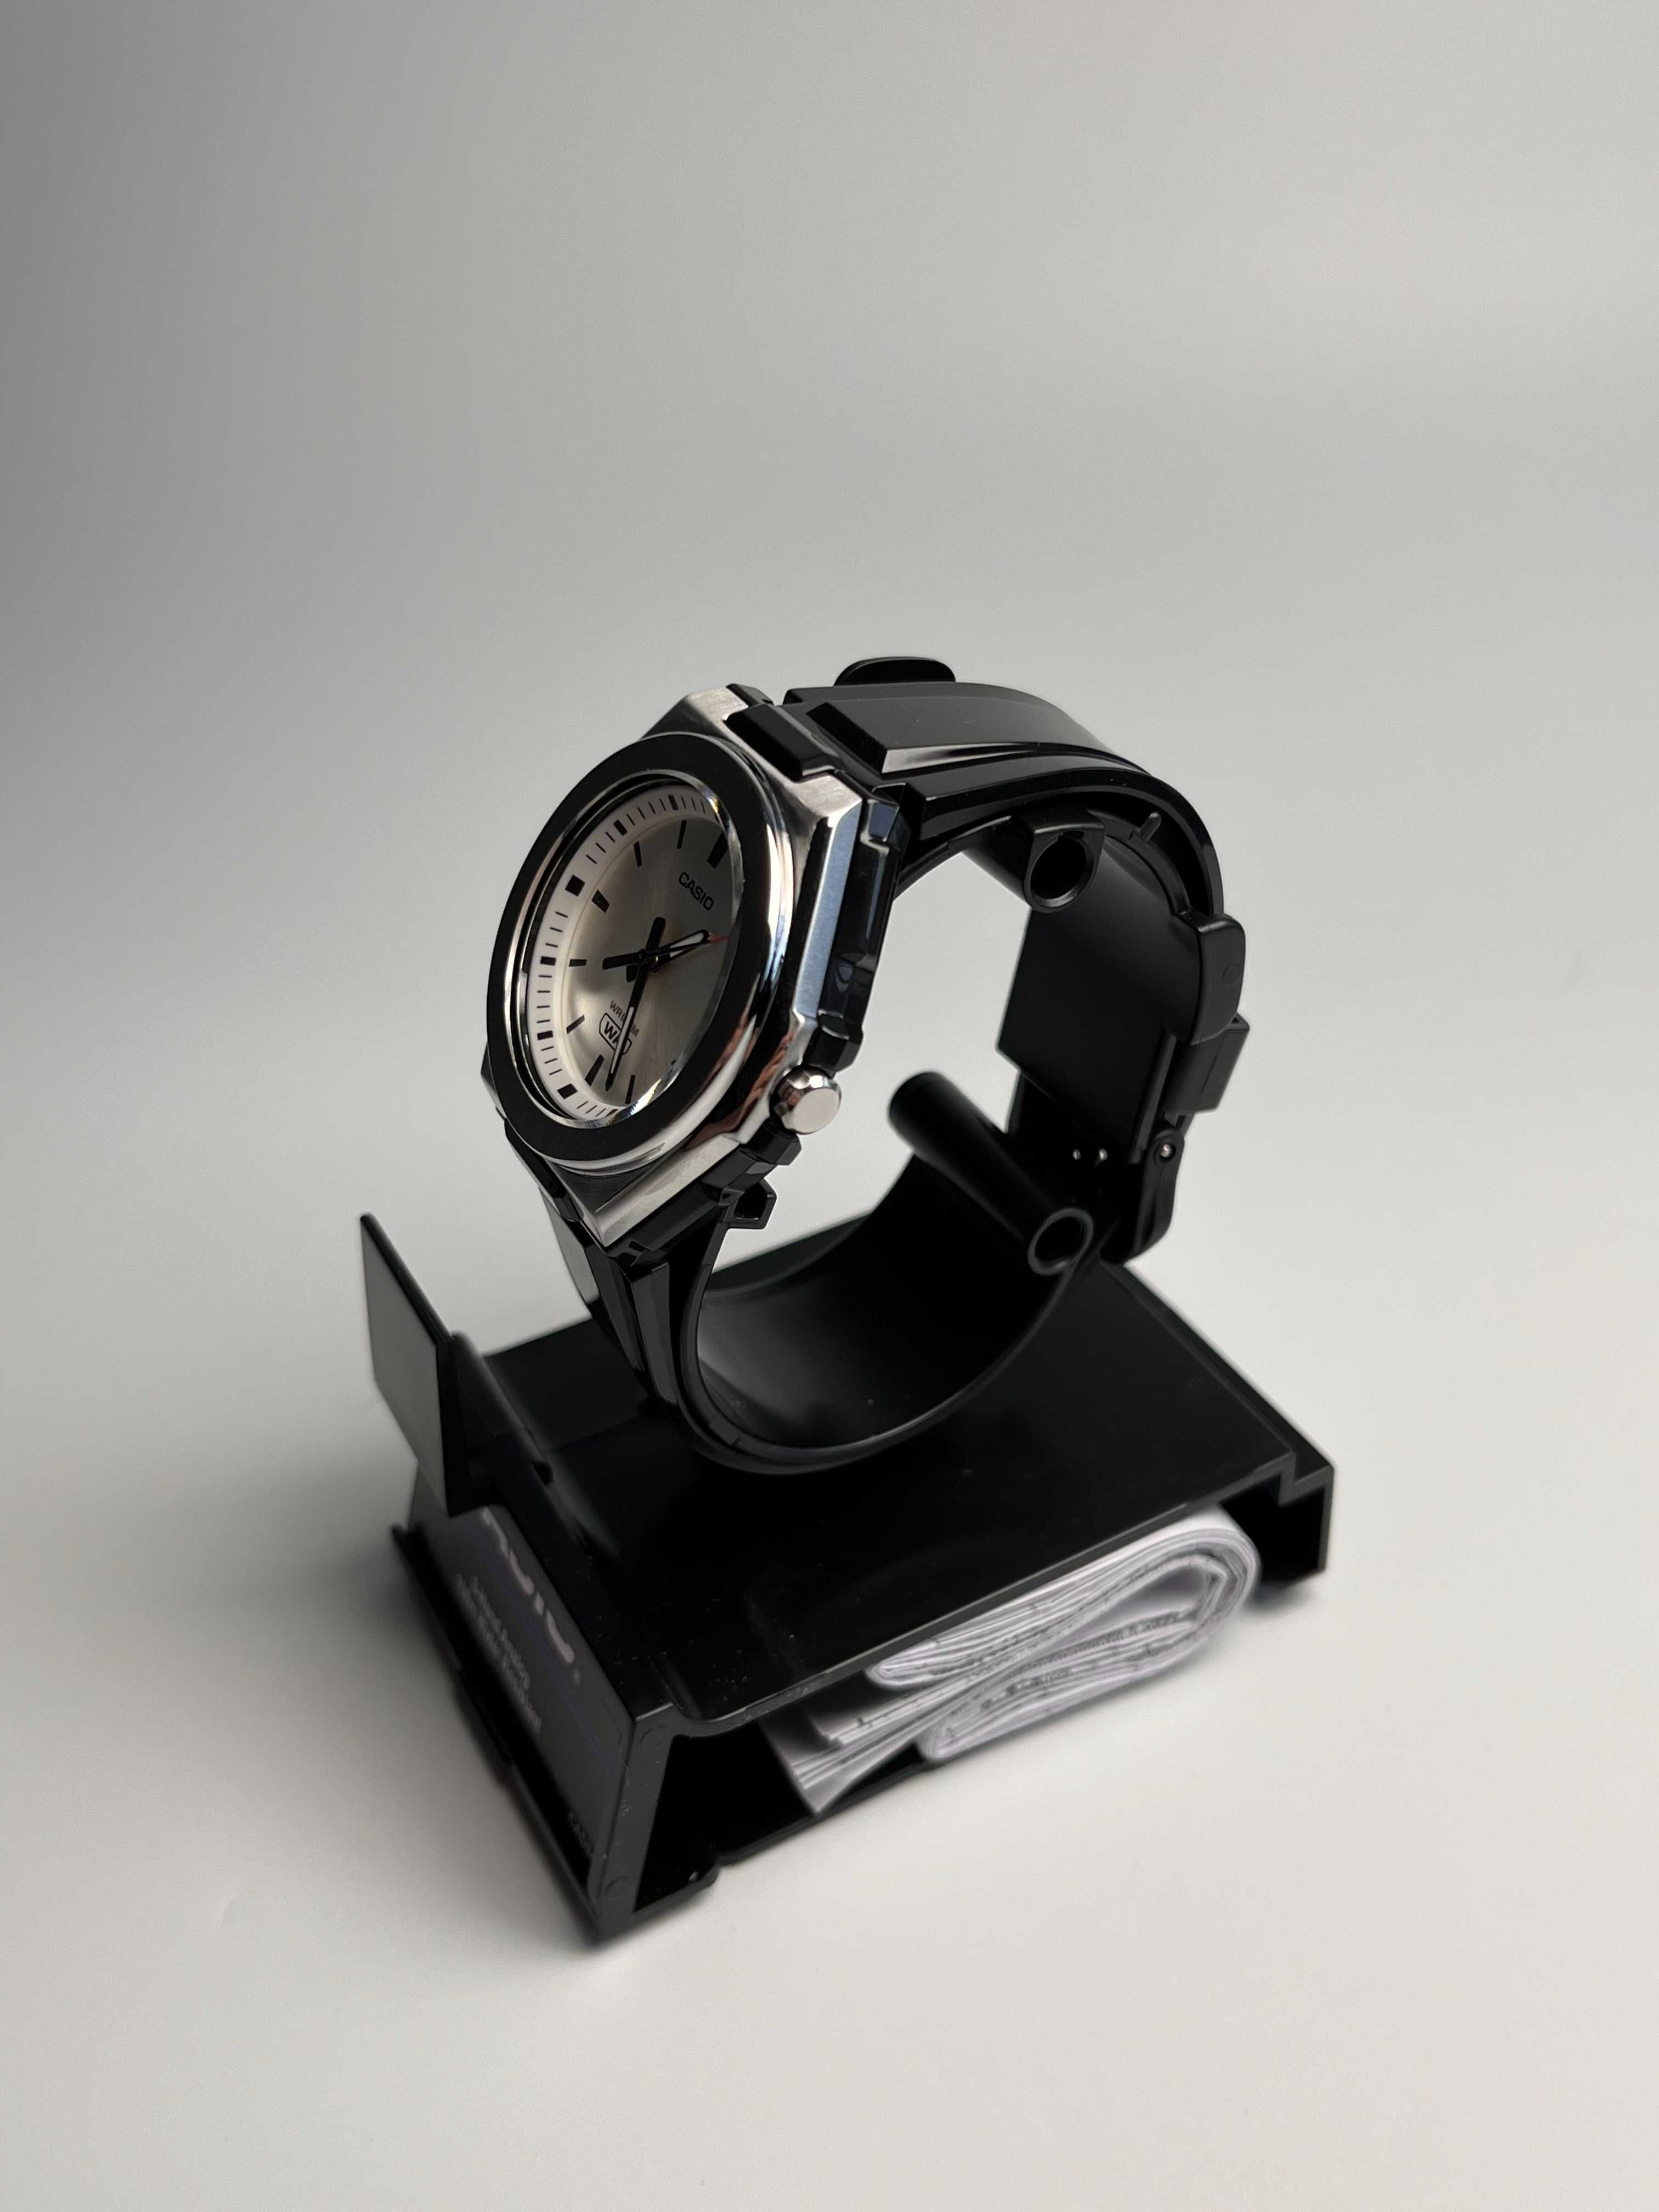 Casio LWA-300H-7E2VCF, годинник касіо, часы касио Ø42мм